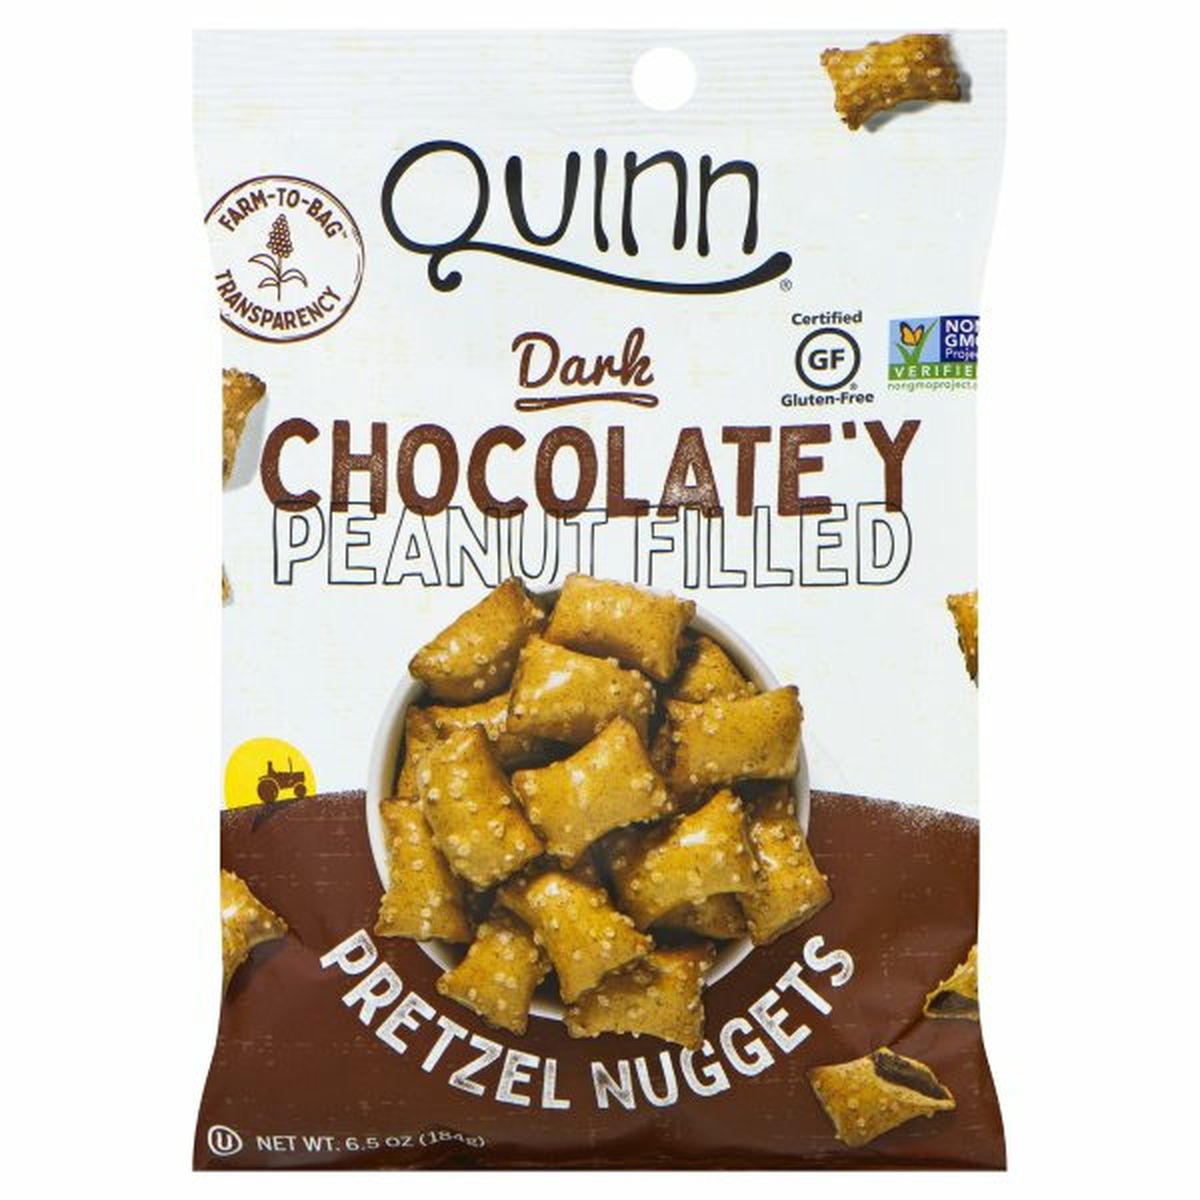 Calories in Quinn Pretzel Nuggets, Dark Chocolate'y Peanut Filled